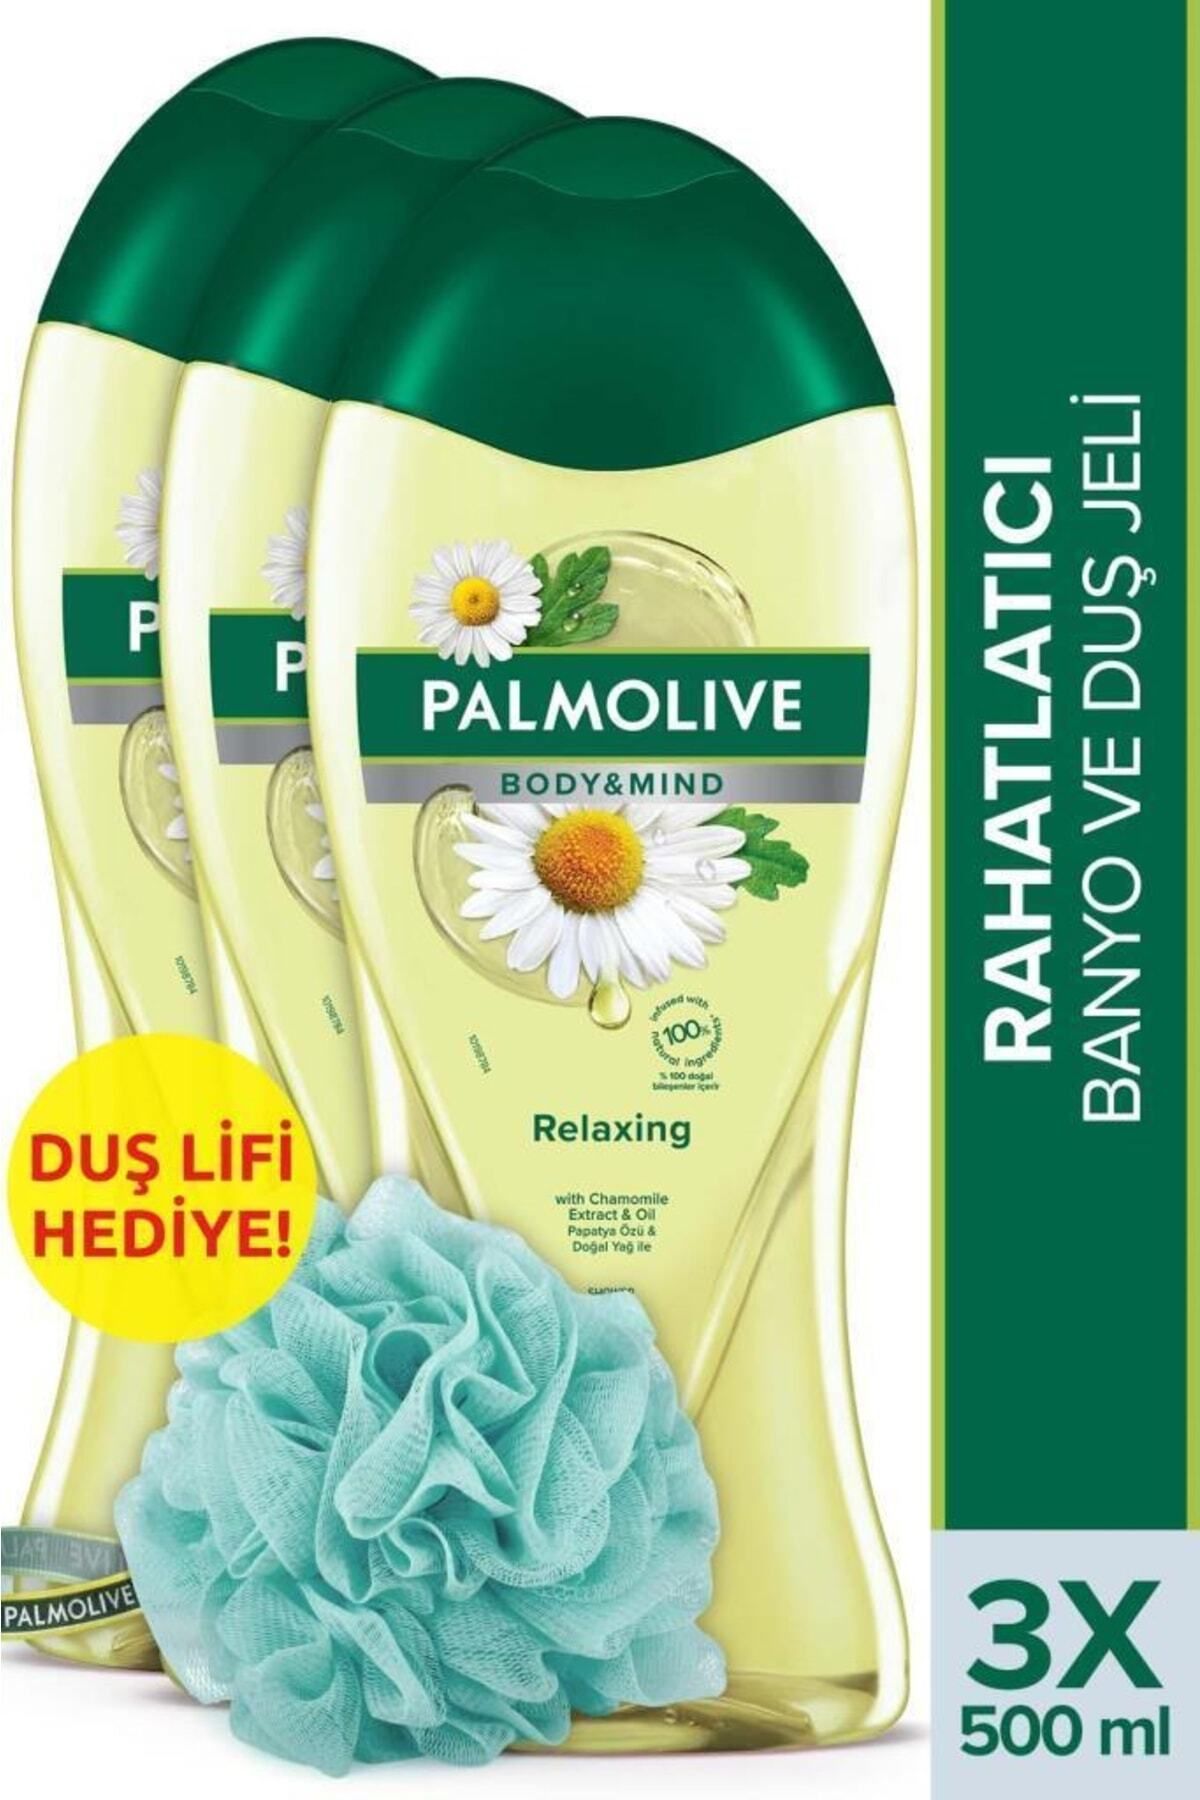 Palmolive Body & Mind Papatya Özü Ve Doğal Yağ Ile Banyo Ve Duş Jeli 500 ml X 3 Adet Duş Lifi Hedi